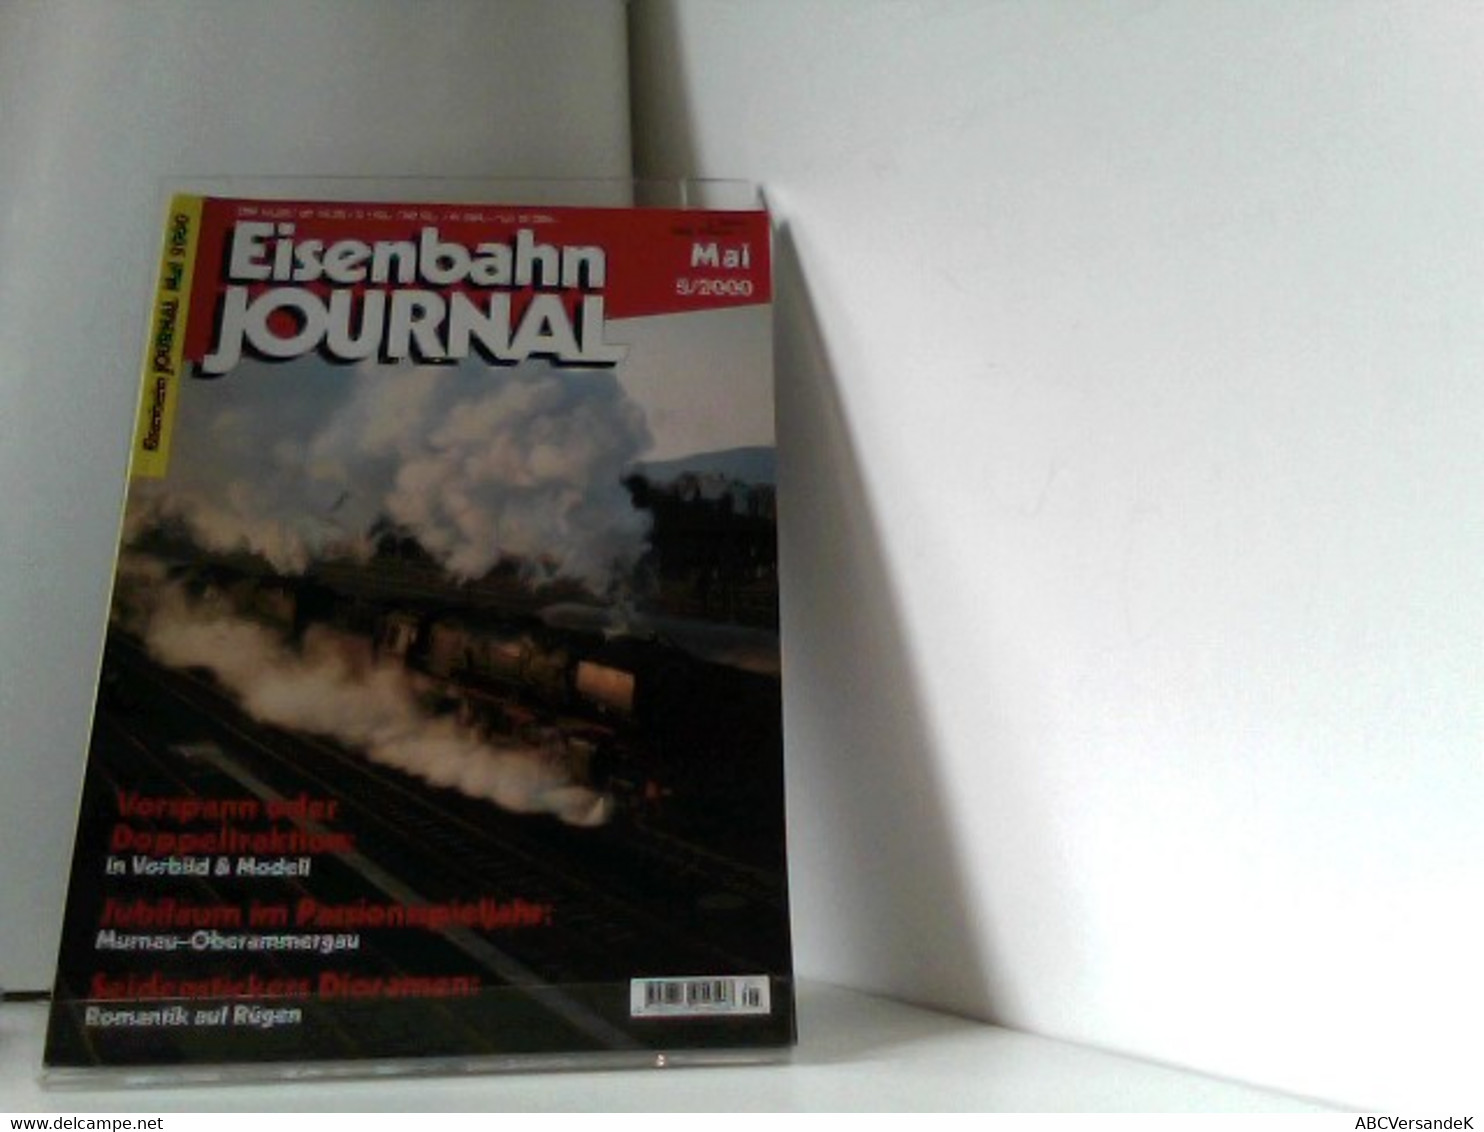 Eisenbahn Journal Mai 5/2000 - Transport